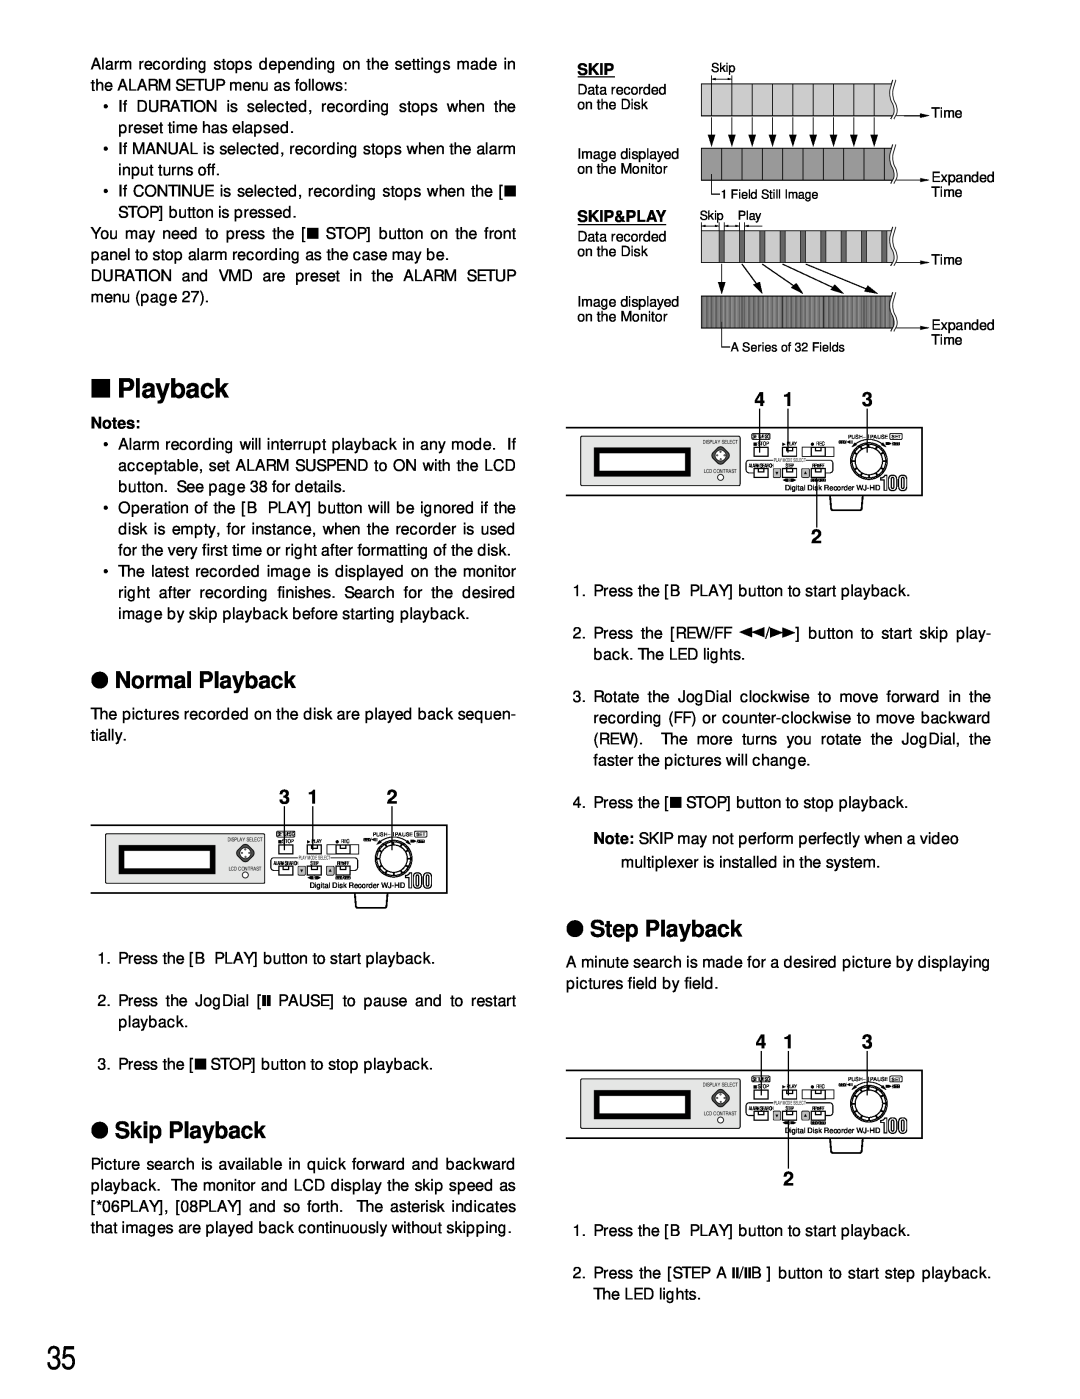 Panasonic WJ-HD100 operating instructions Normal Playback, Skip Playback, Step Playback 